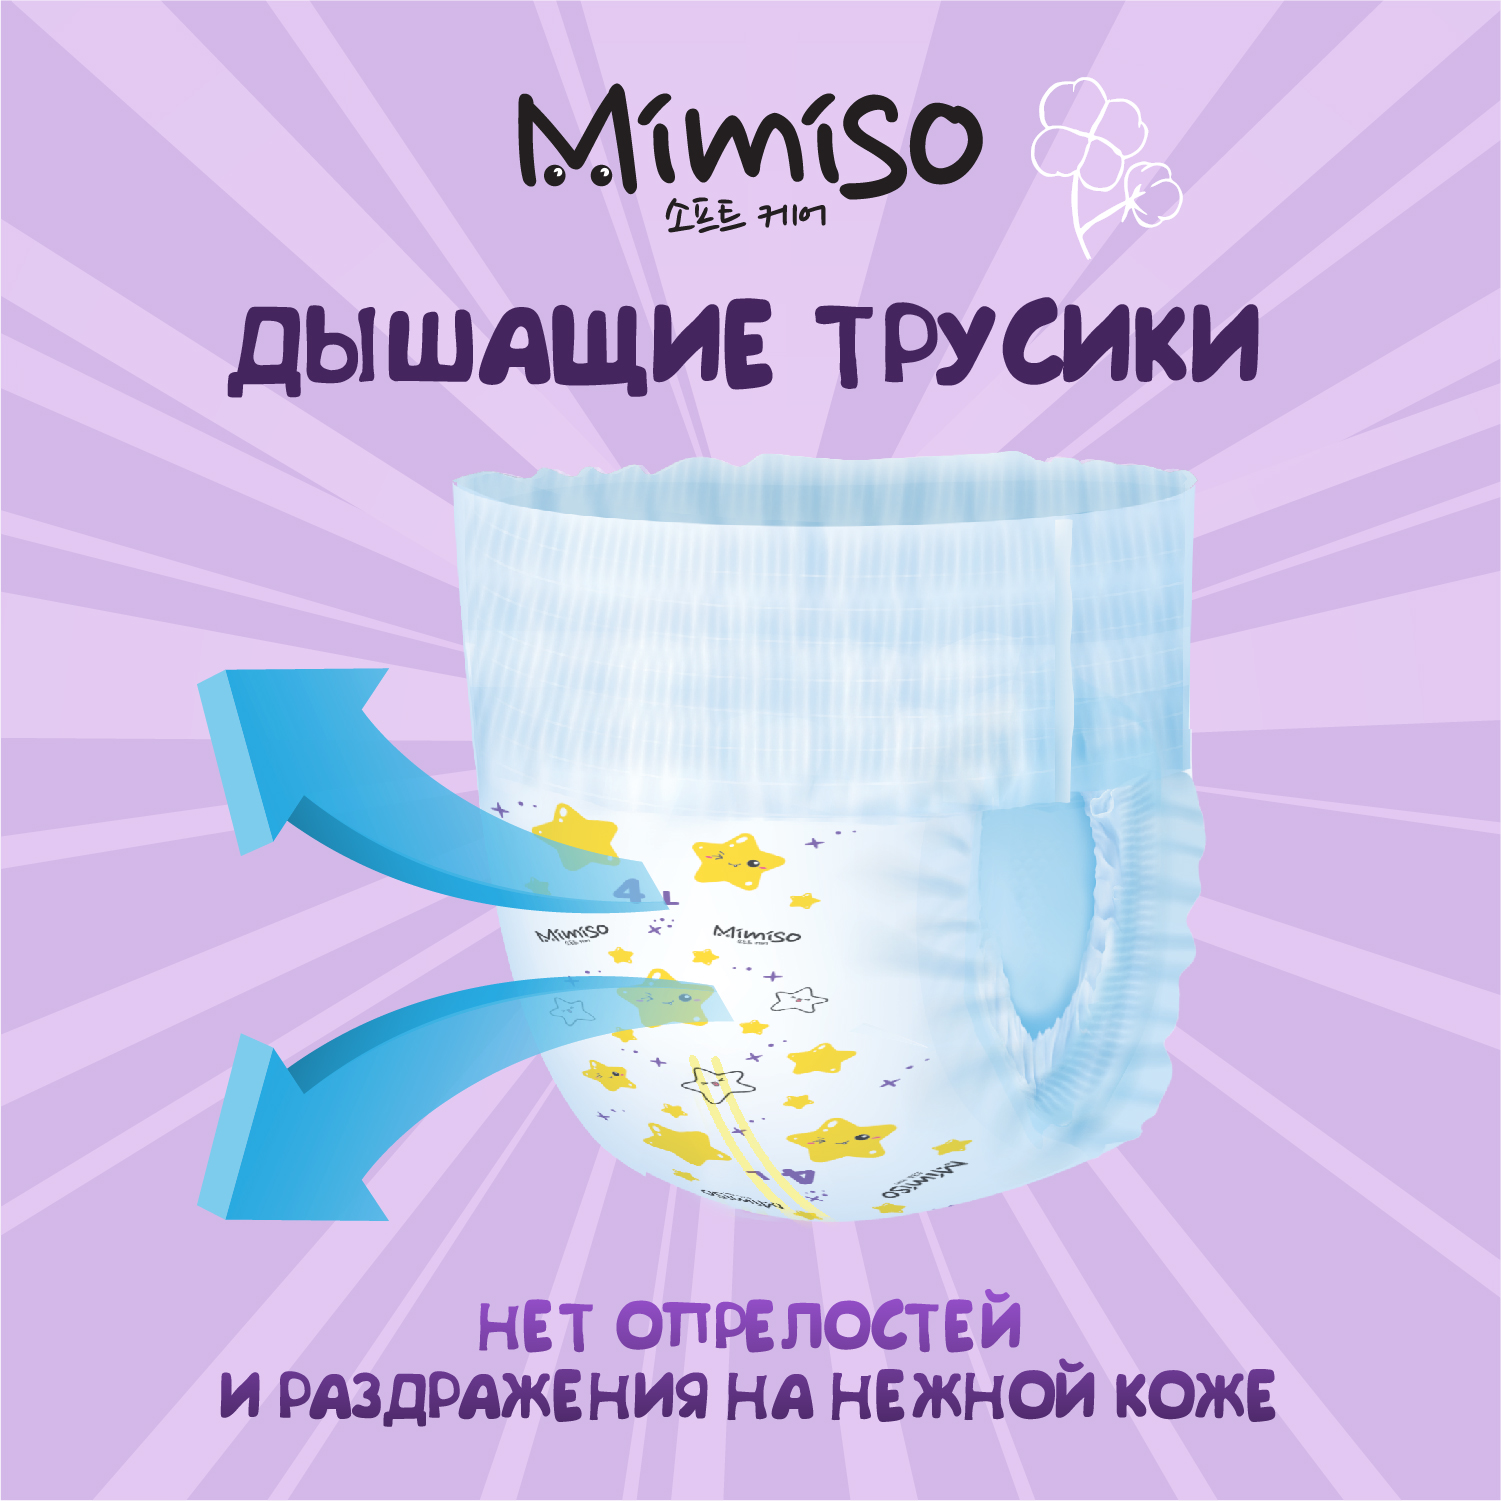 Трусики Mimiso одноразовые для детей 6/XXL 16-25 кг 34шт - фото 5